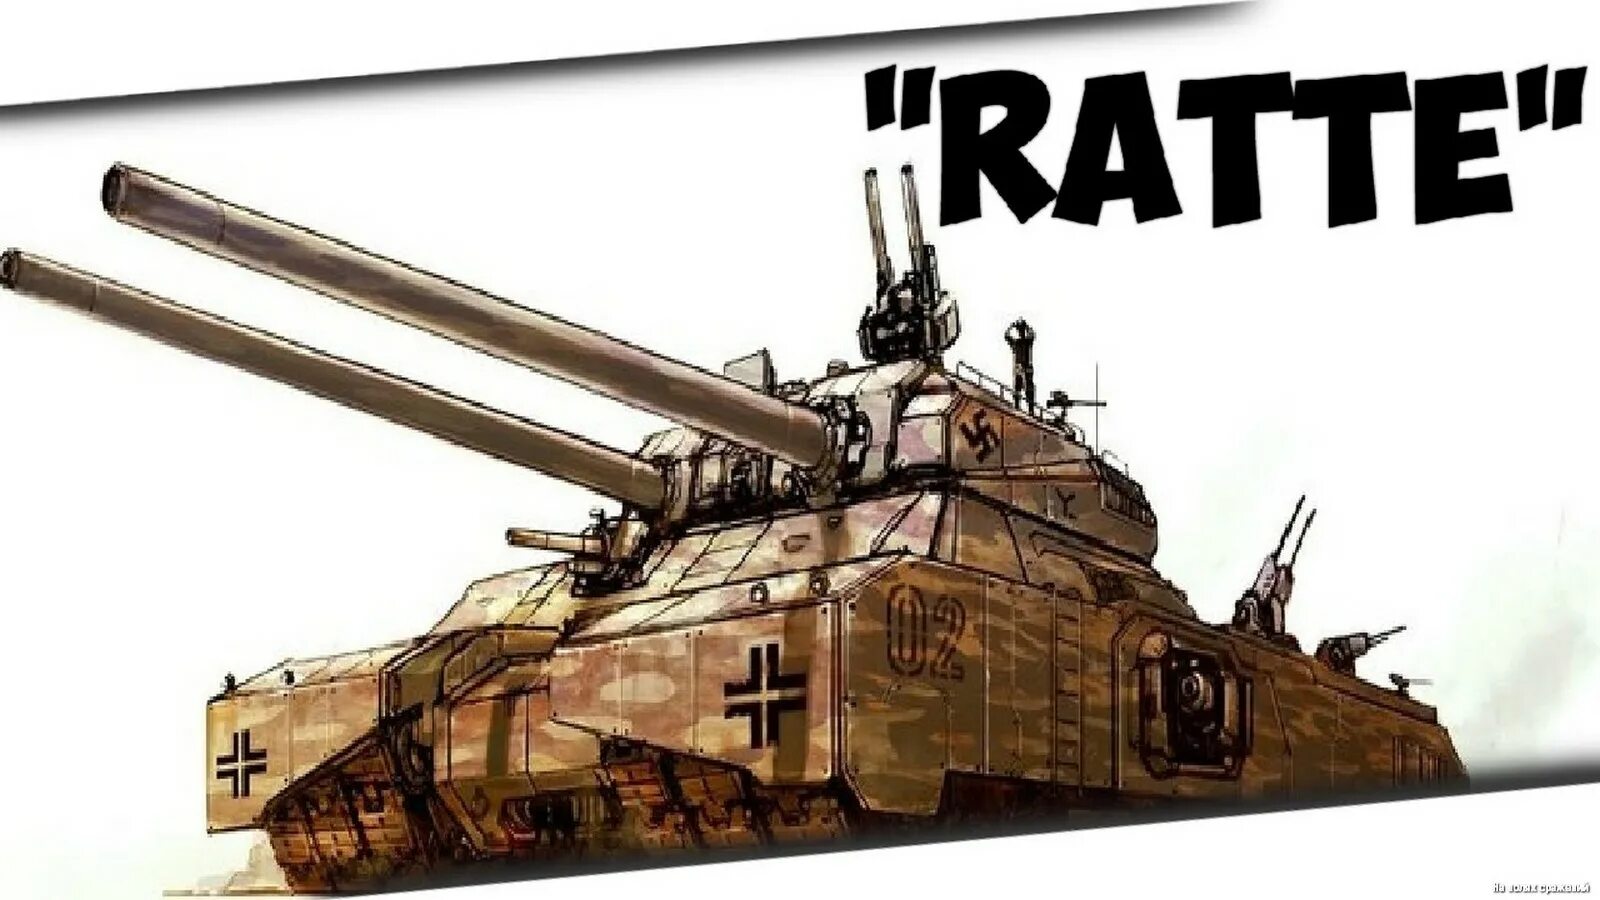 Рата танк. Танк Landkreuzer p1000 Ratte. Ленд Крузер п 1000 РАТТЕ. Танк РАТТЕ крыса. P 1000 Ratte крыса.